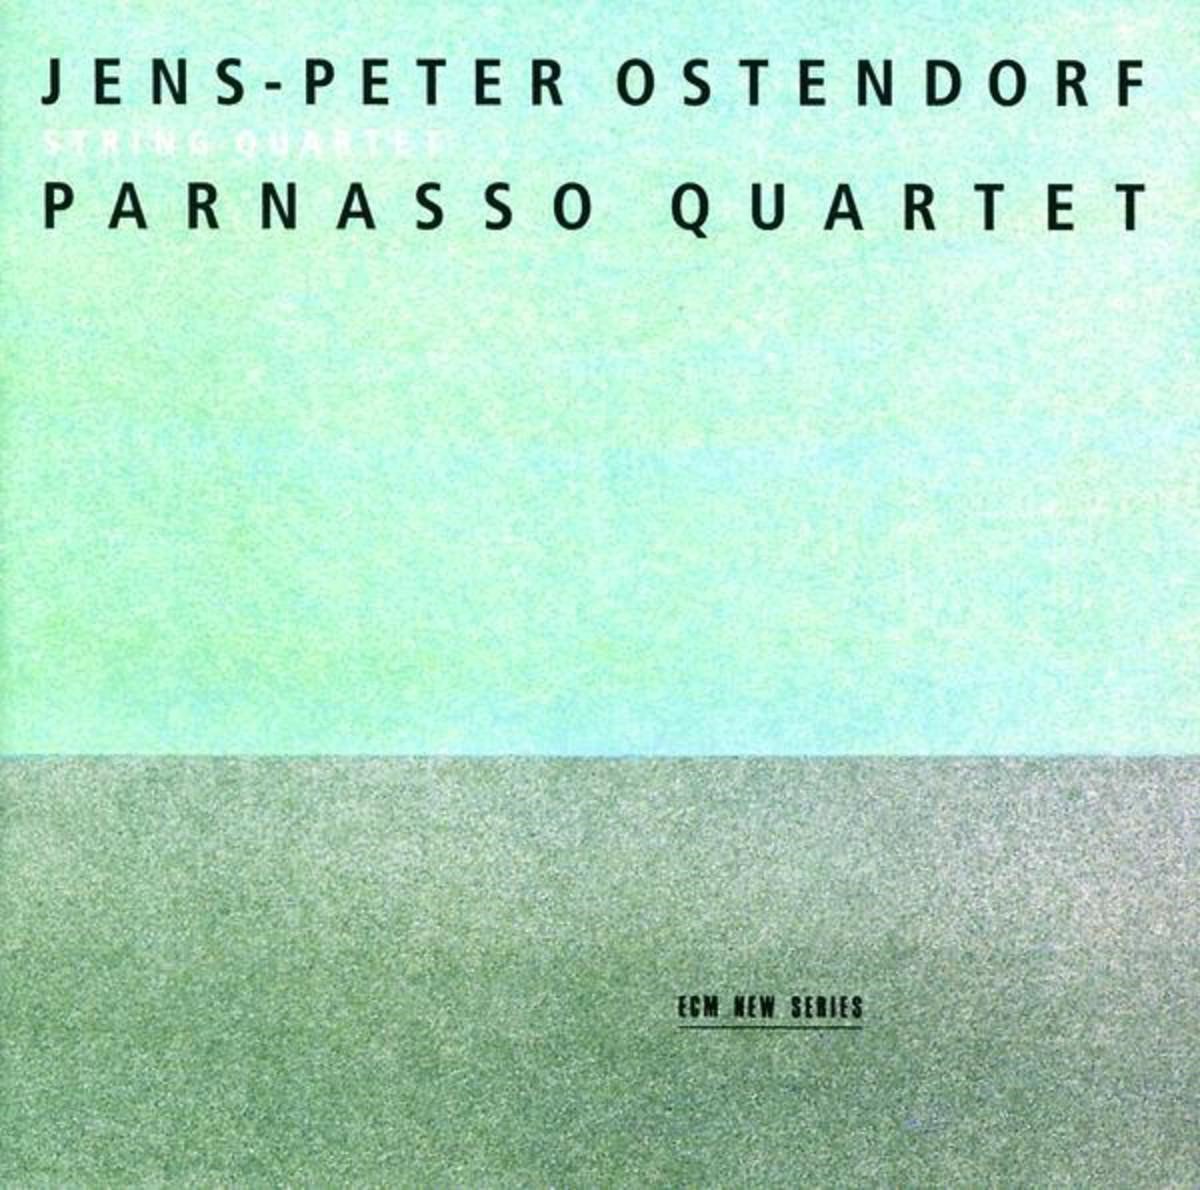 Jens-Peter Ostendorf: String Quartet | Parnasso Quartet